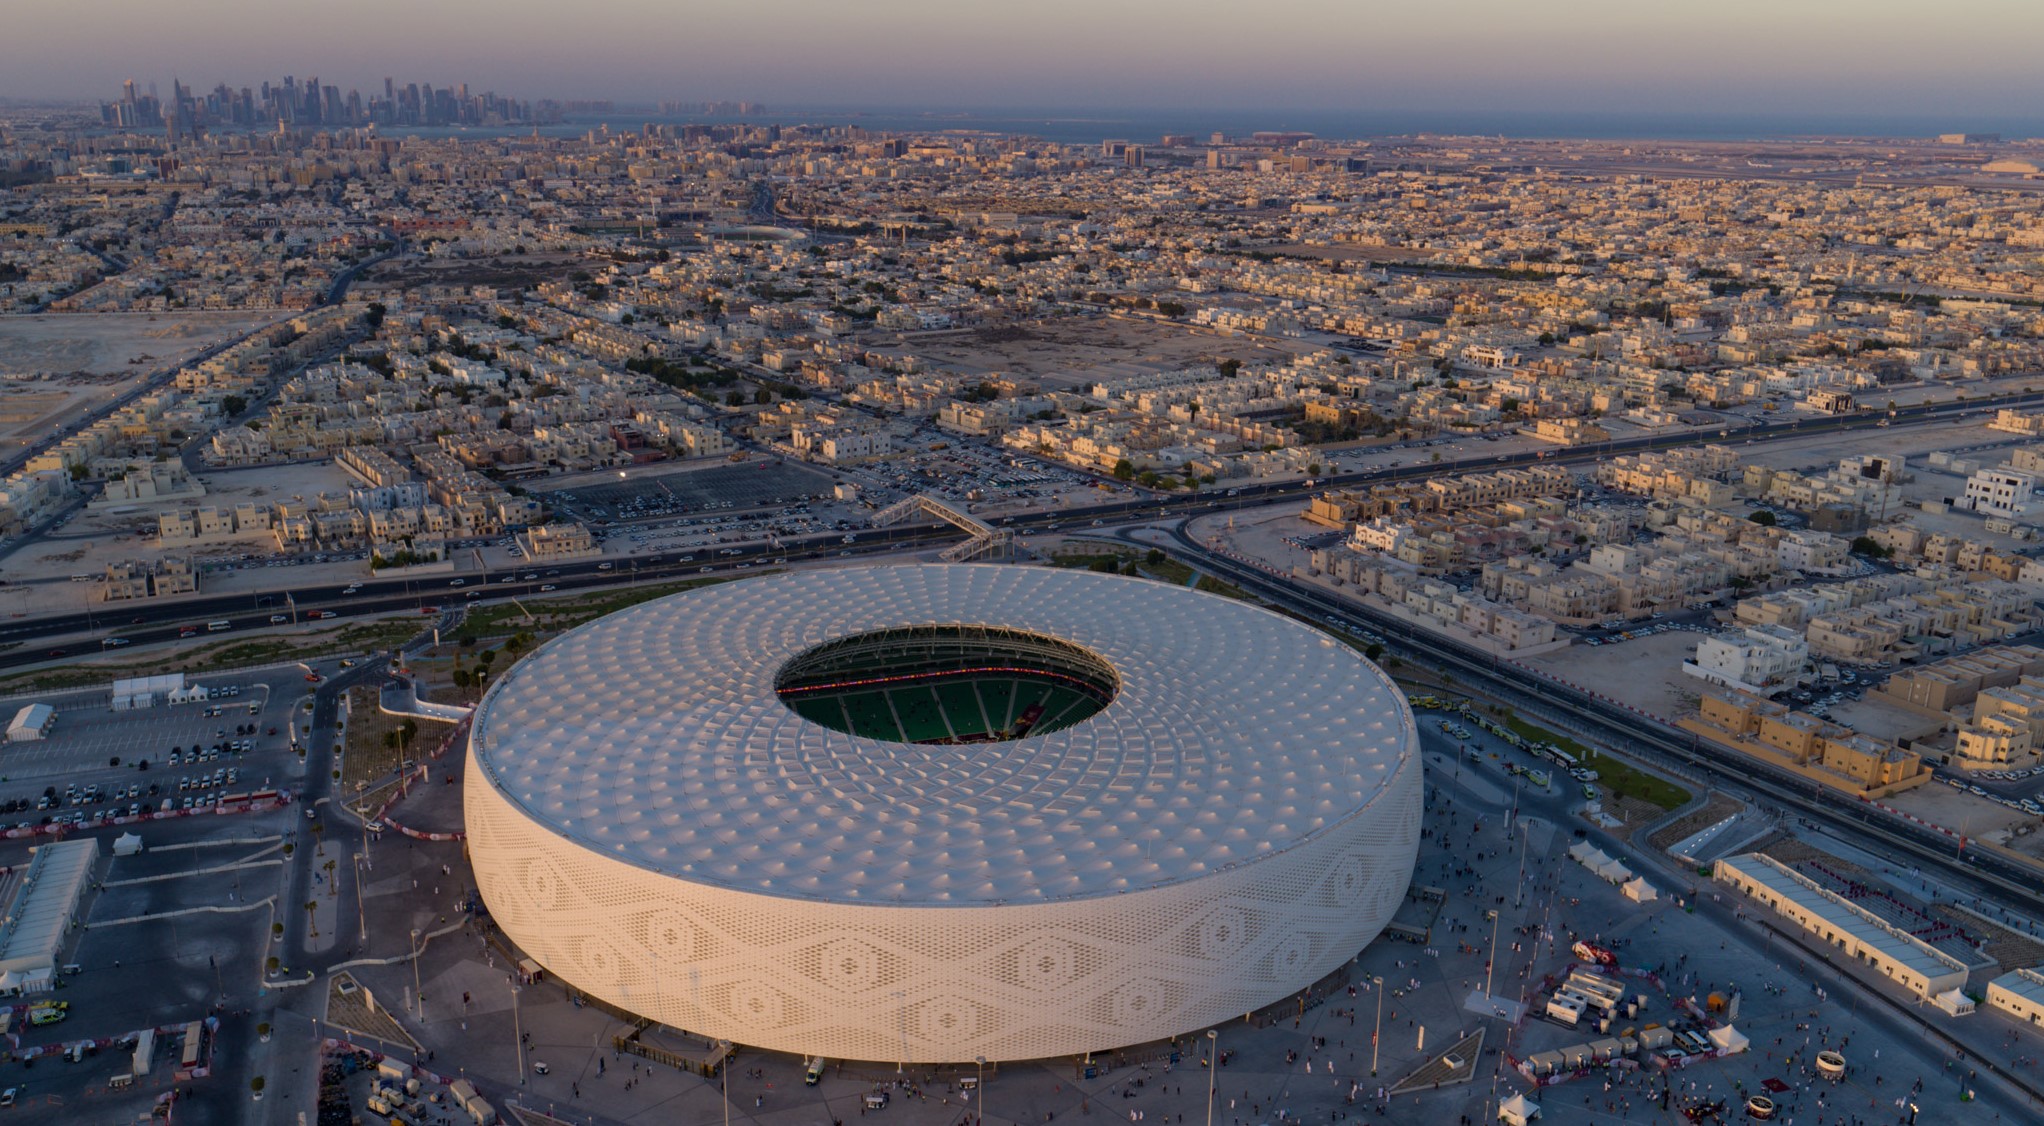 30 days to FIFA World Cup Qatar 2022